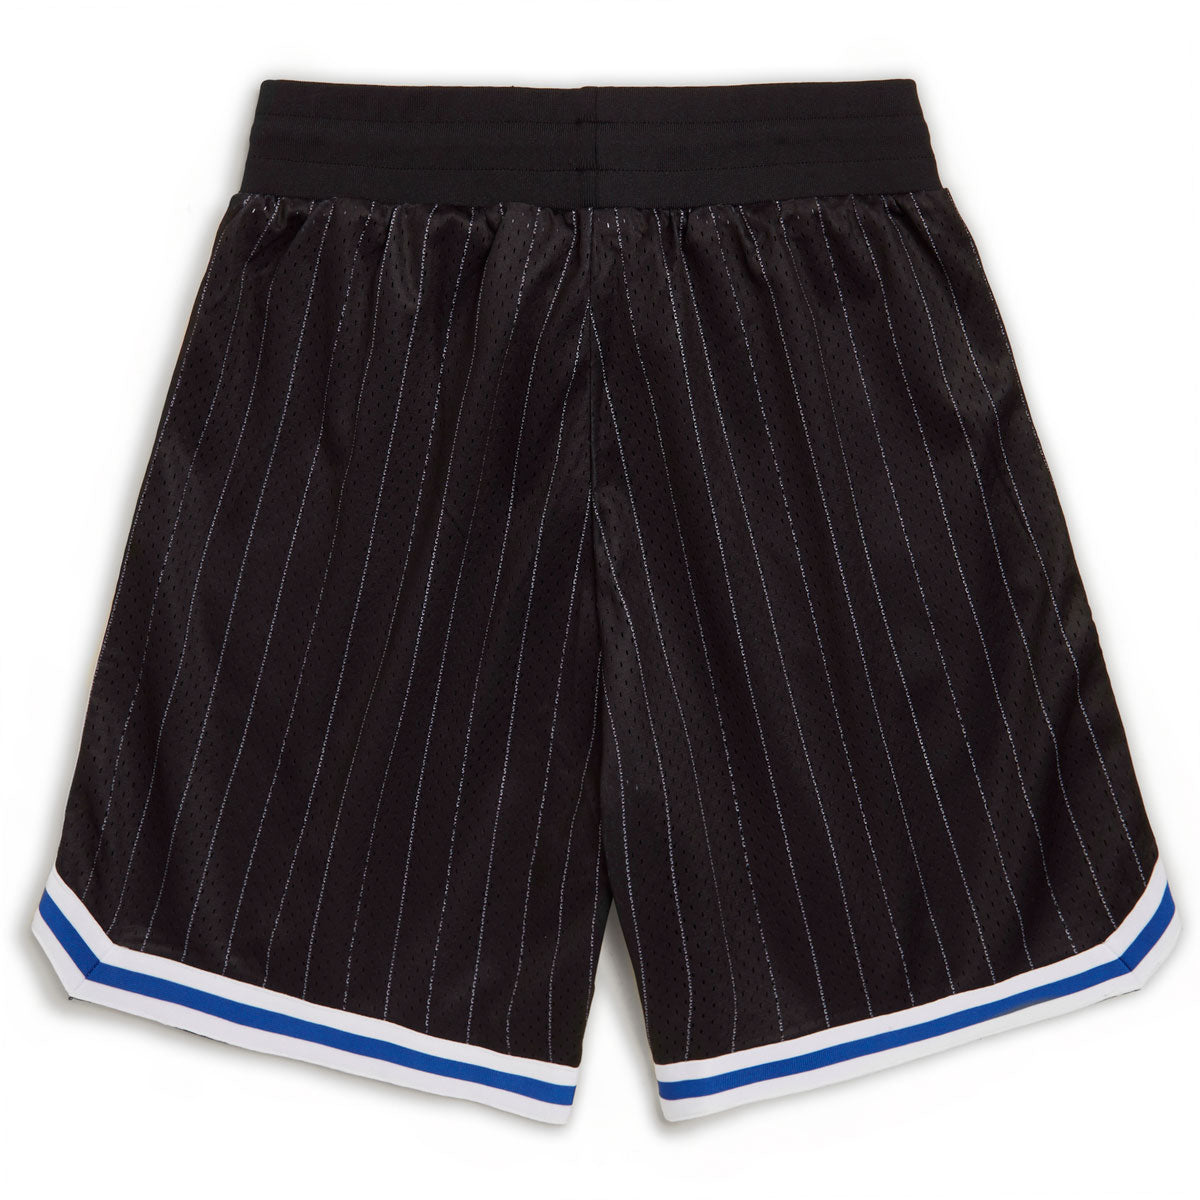 CCS Crossover Basketball Shorts - Black/Blue image 2